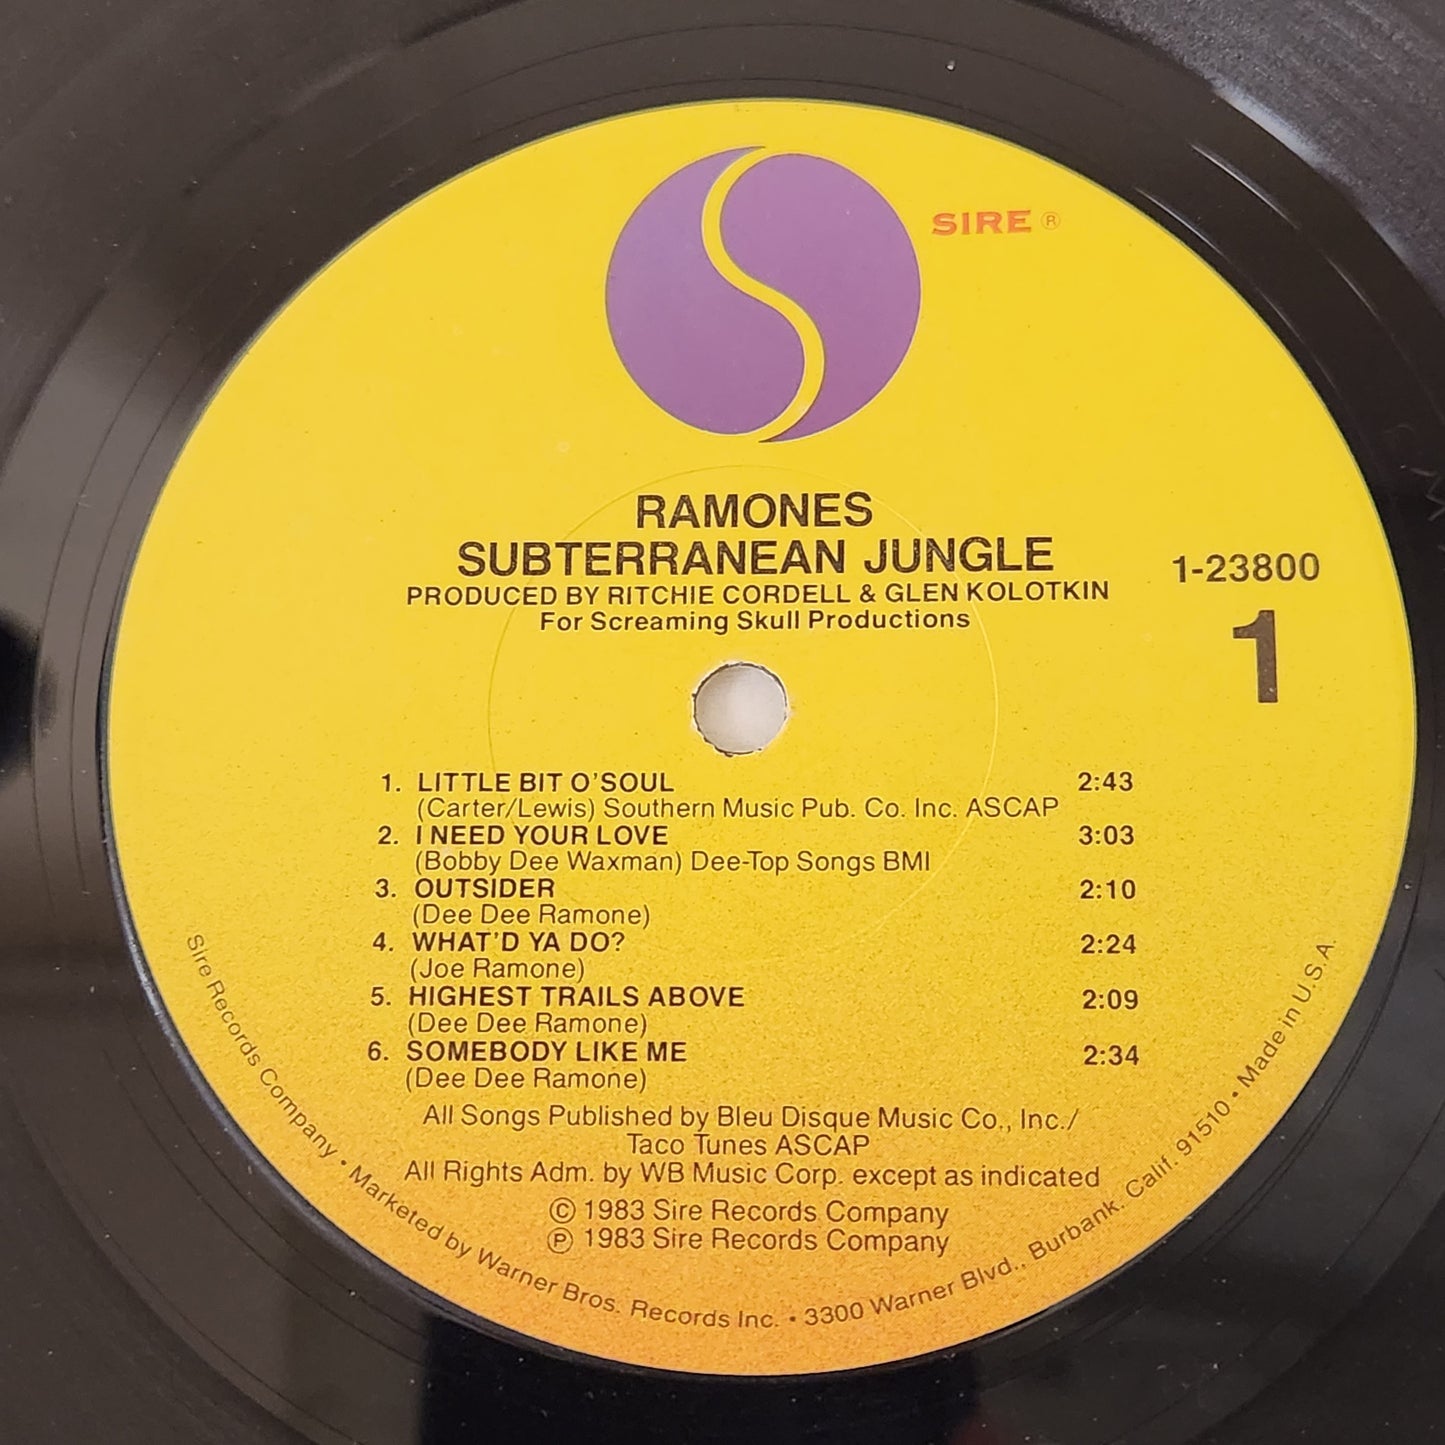 Ramones "Subterranean Jungle" 1983 Punk Rock Record Album